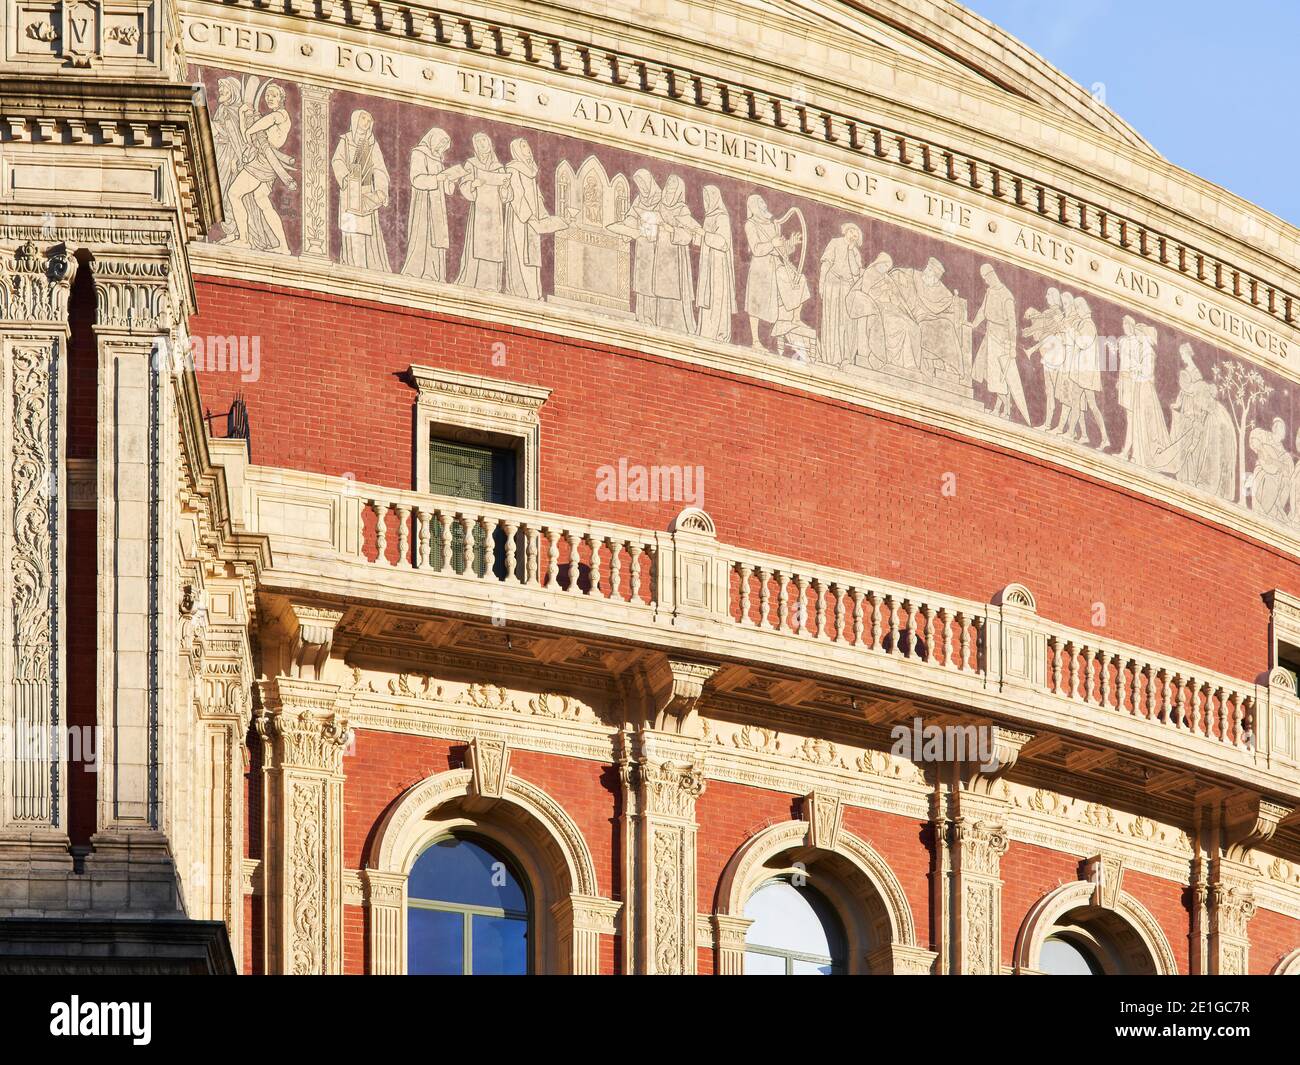 Außenansicht der Royal Albert Hall, South Kensington, London UK. Fertiggestellt im Jahr 1871. Stockfoto